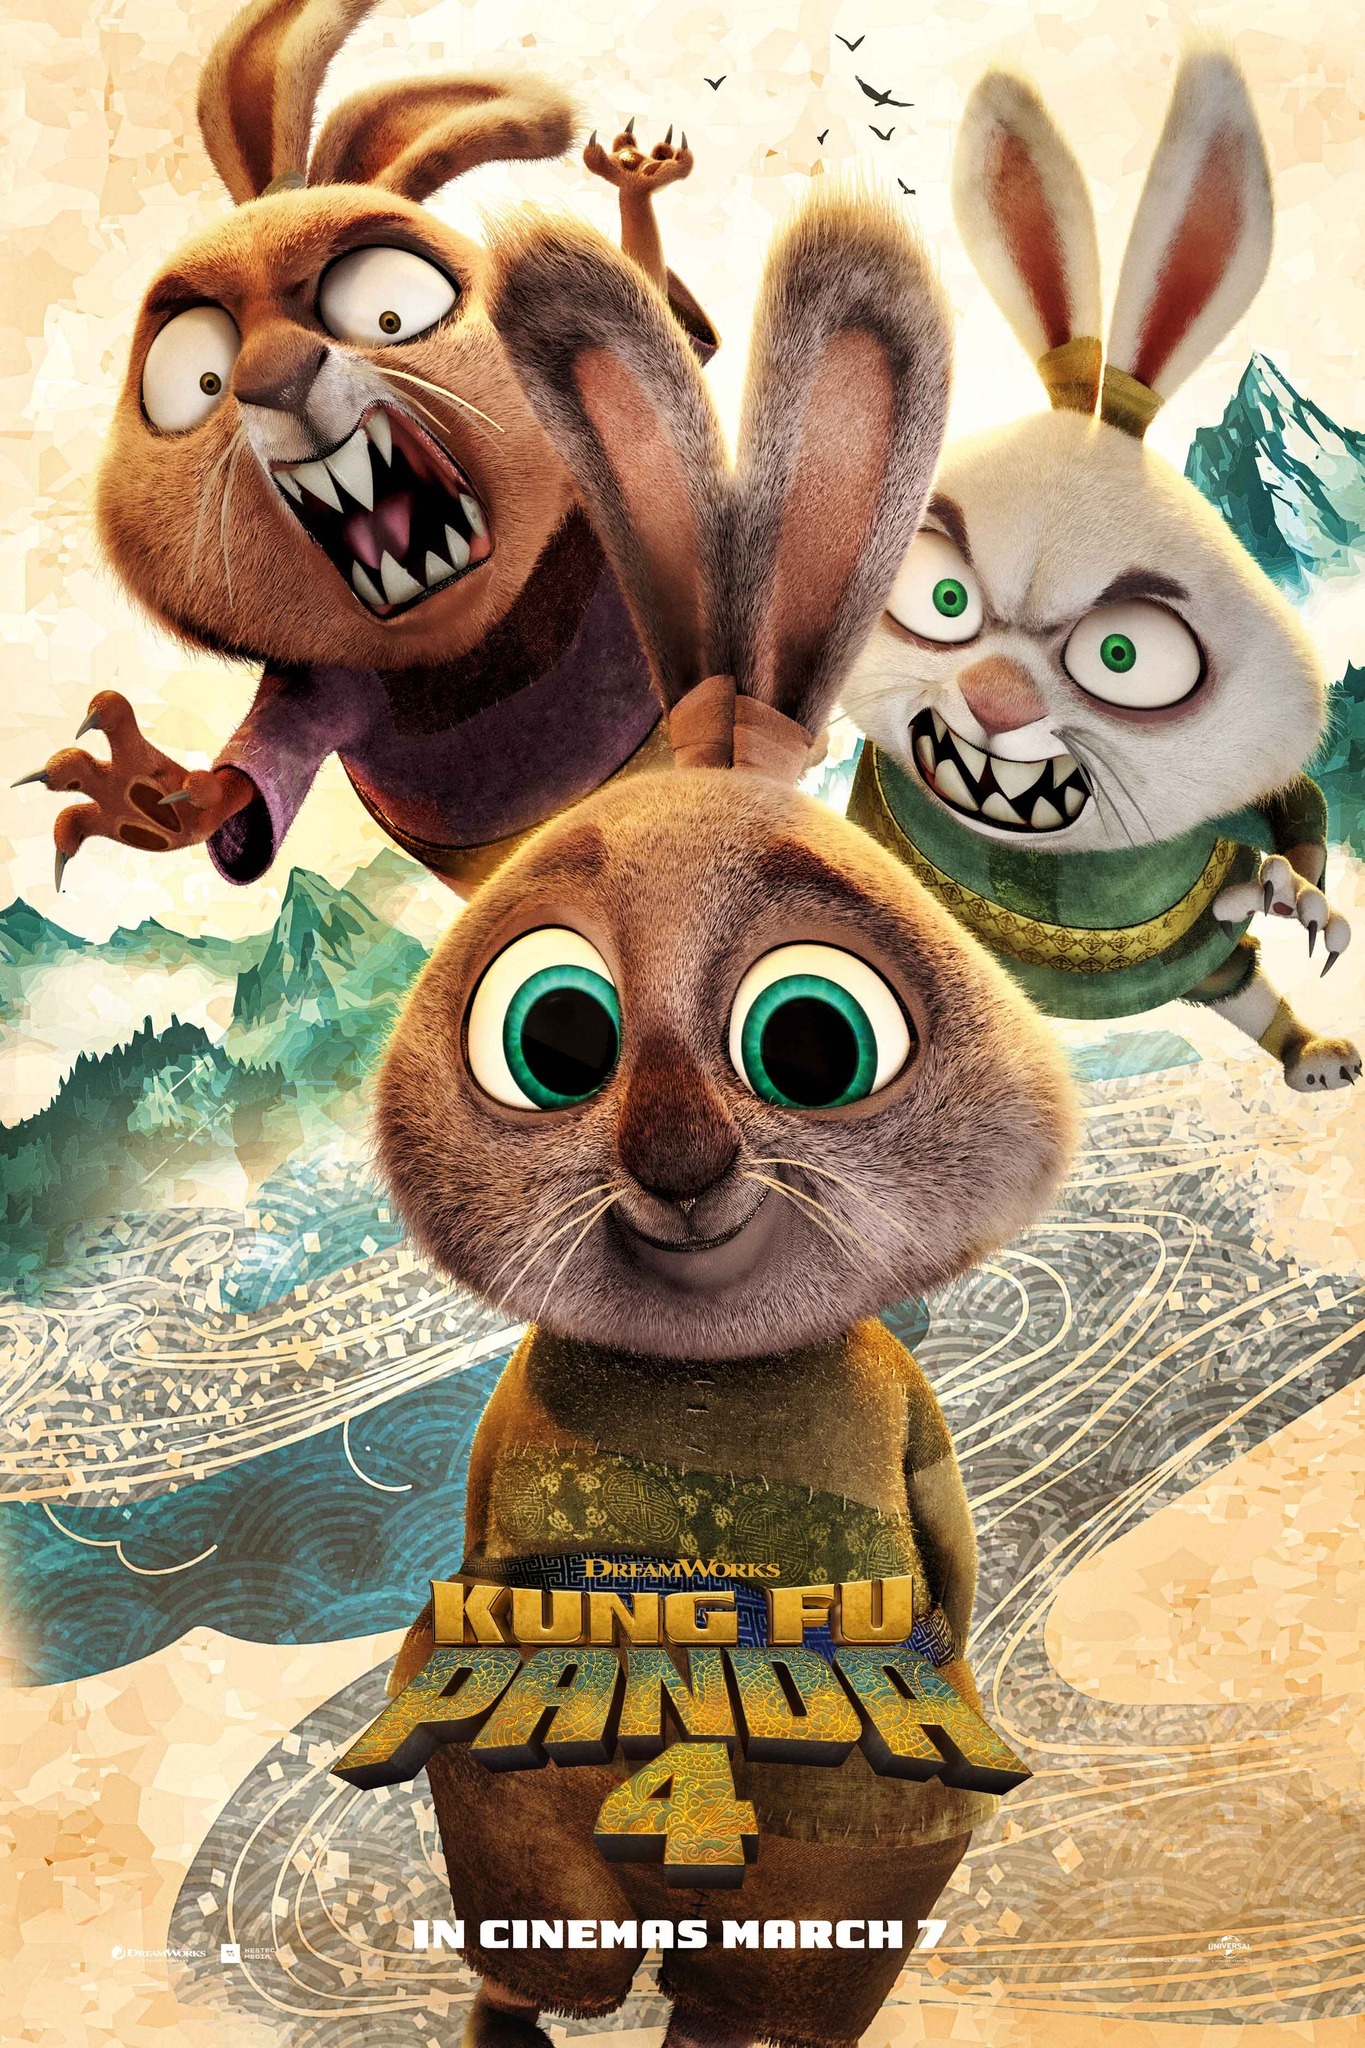 Mega Sized Movie Poster Image for Kung Fu Panda 4 (#7 of 20)